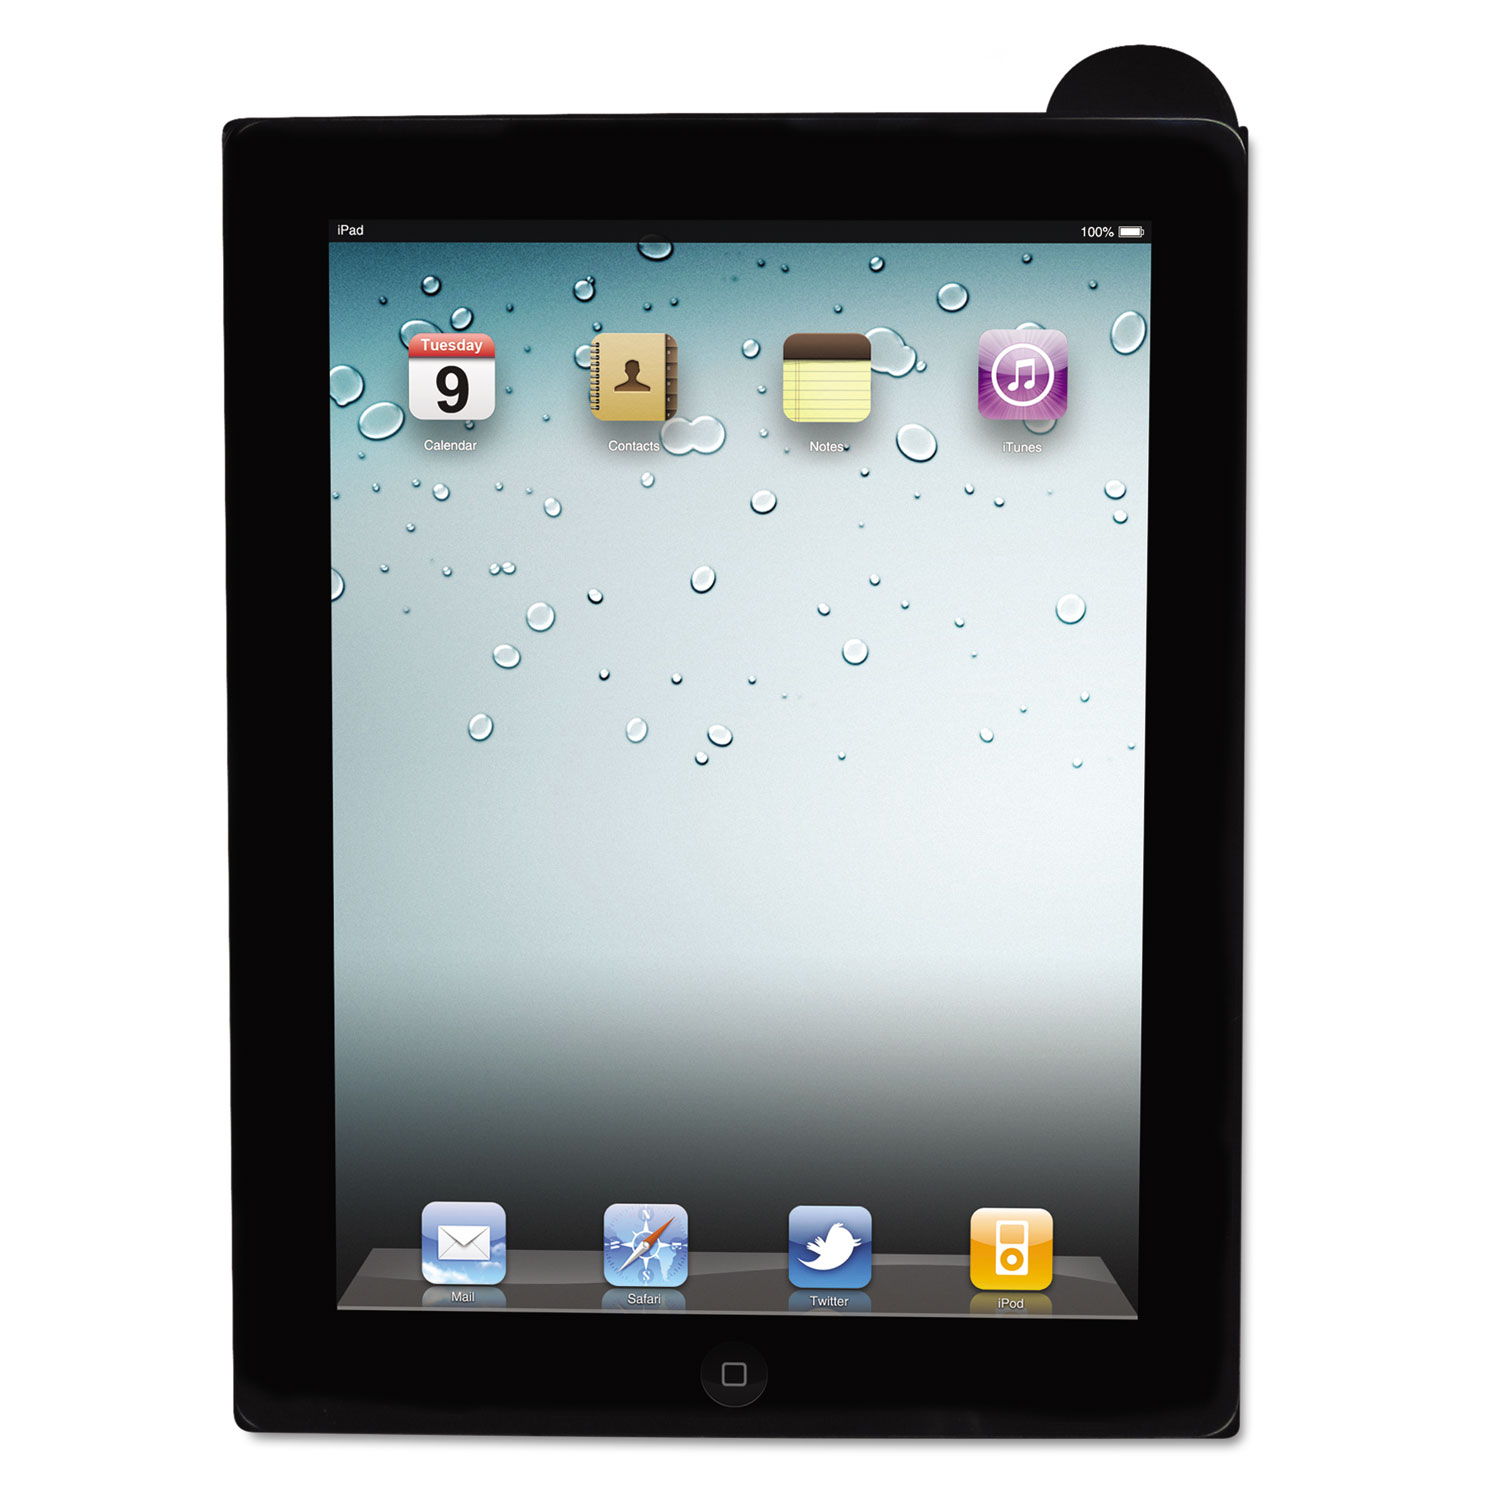 Aluminum Storage Clipboard Accessory for iPad 2/3, Black